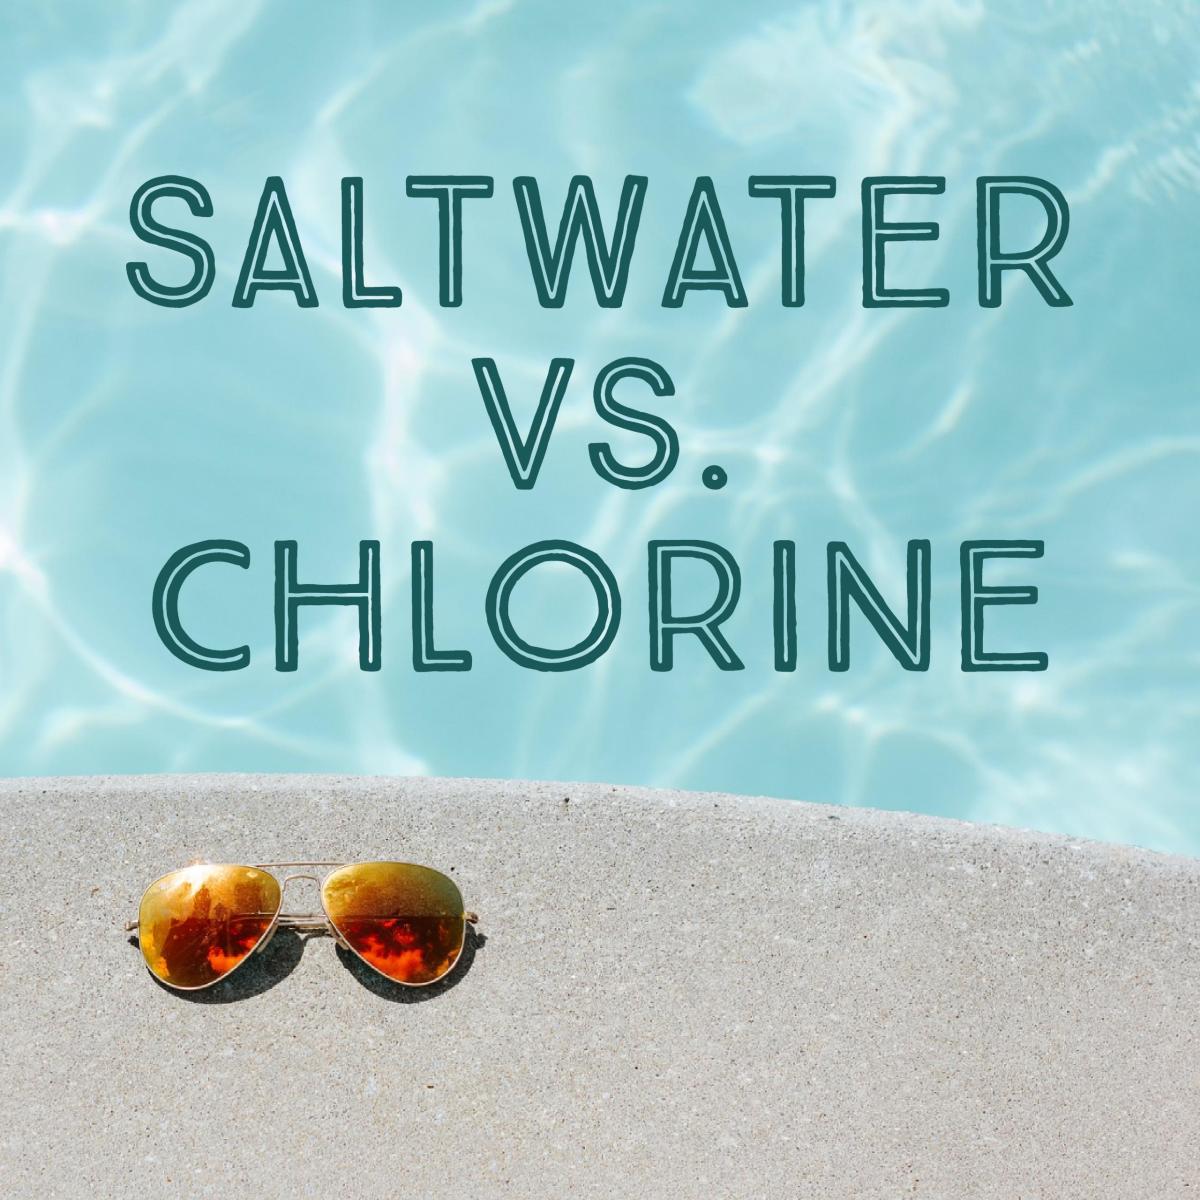 Saltwater vs. Chlorine